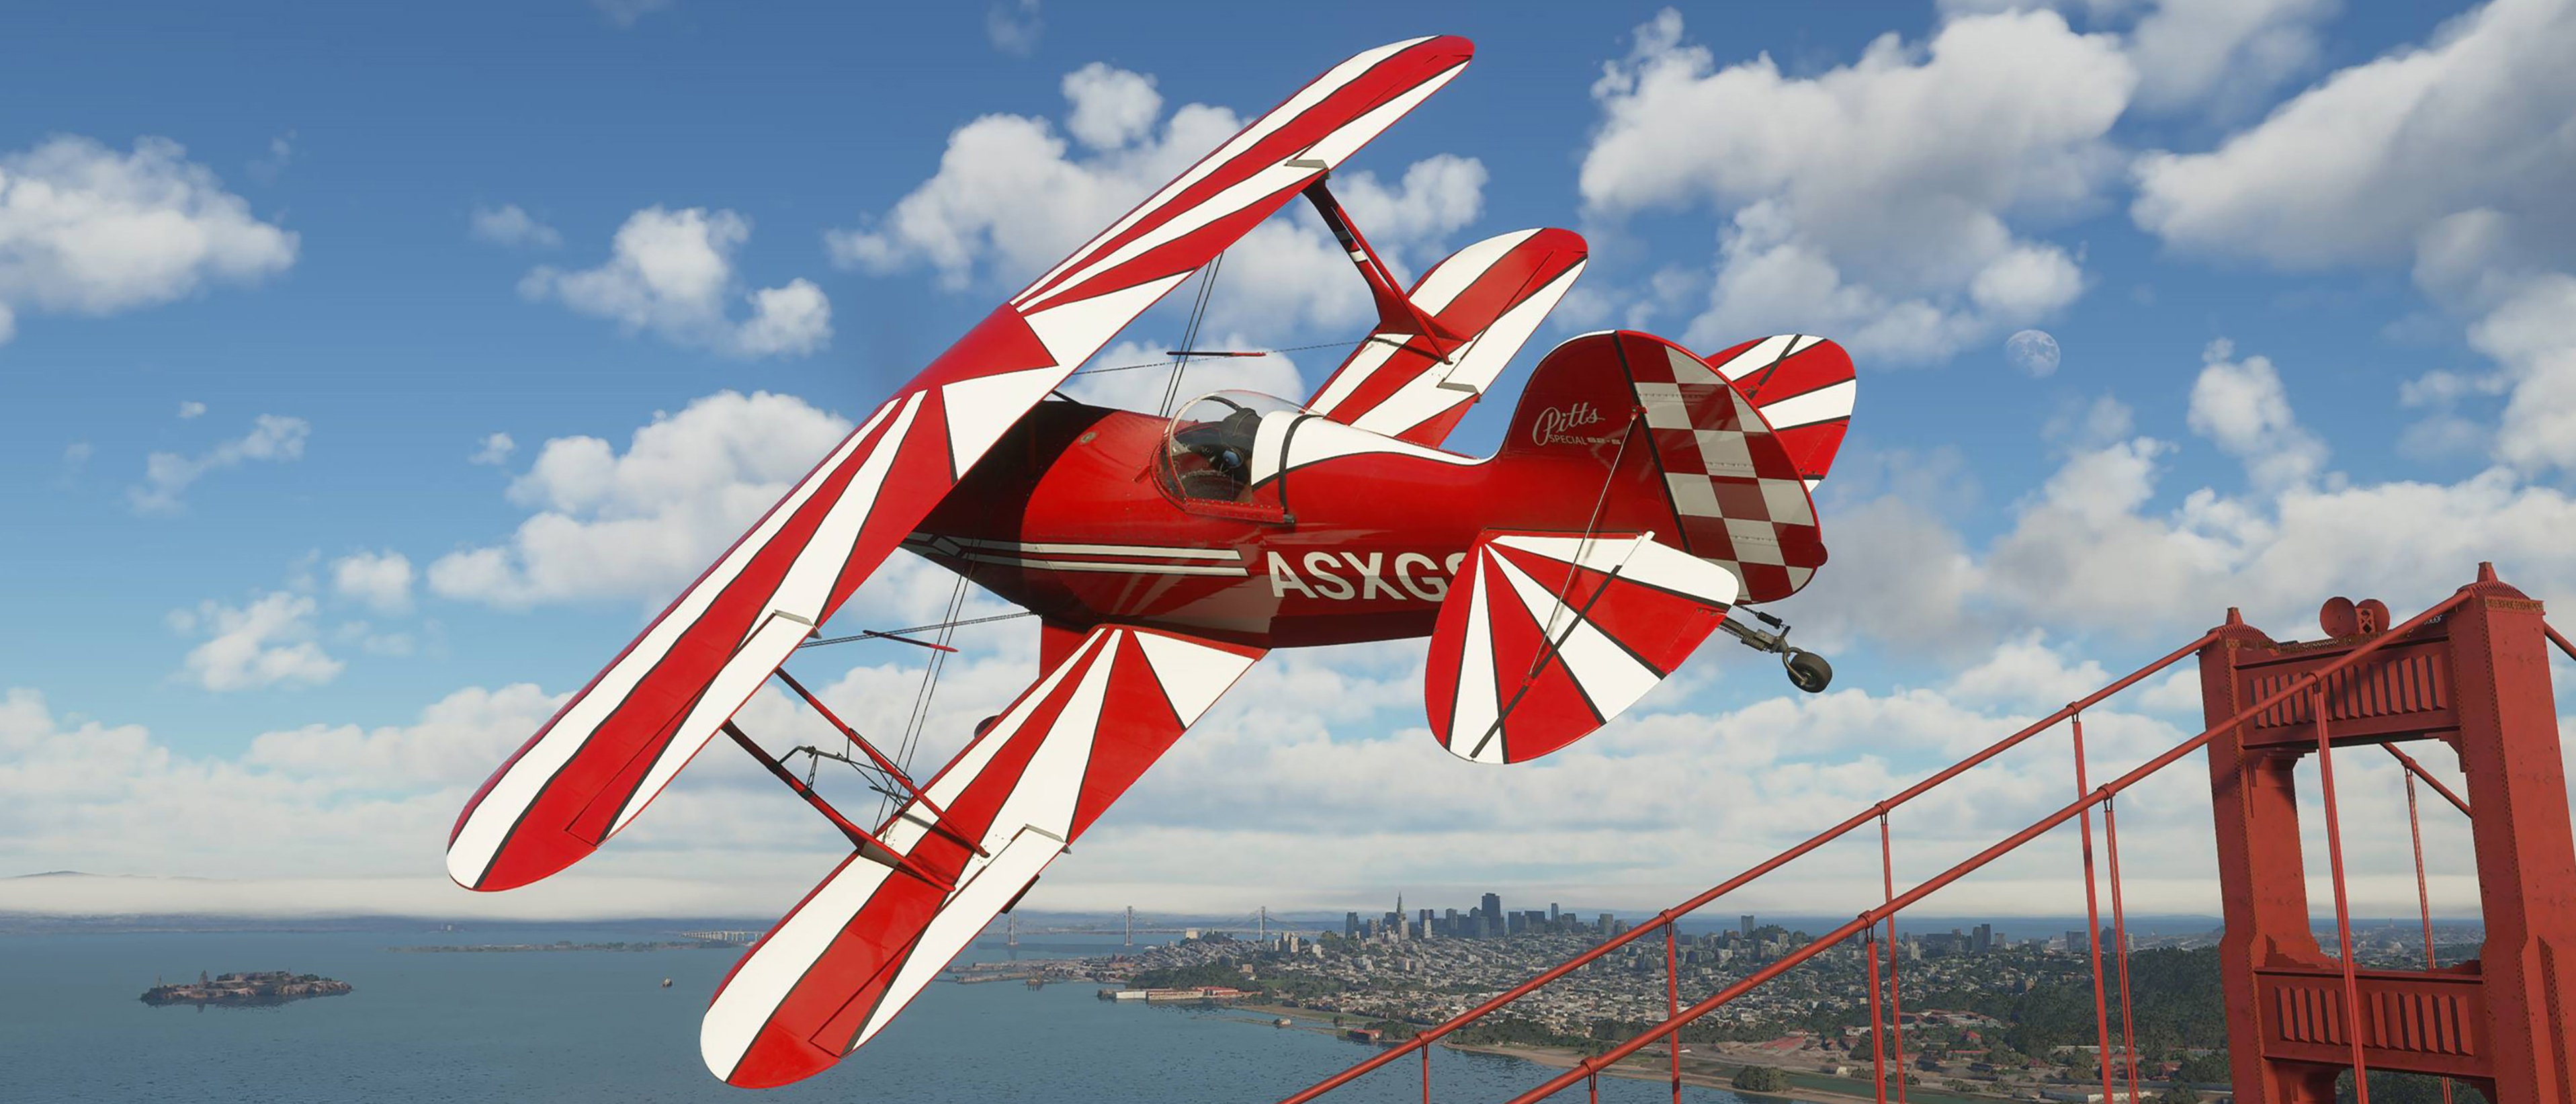 Five things I learned playing Microsoft Flight Simulator 2020